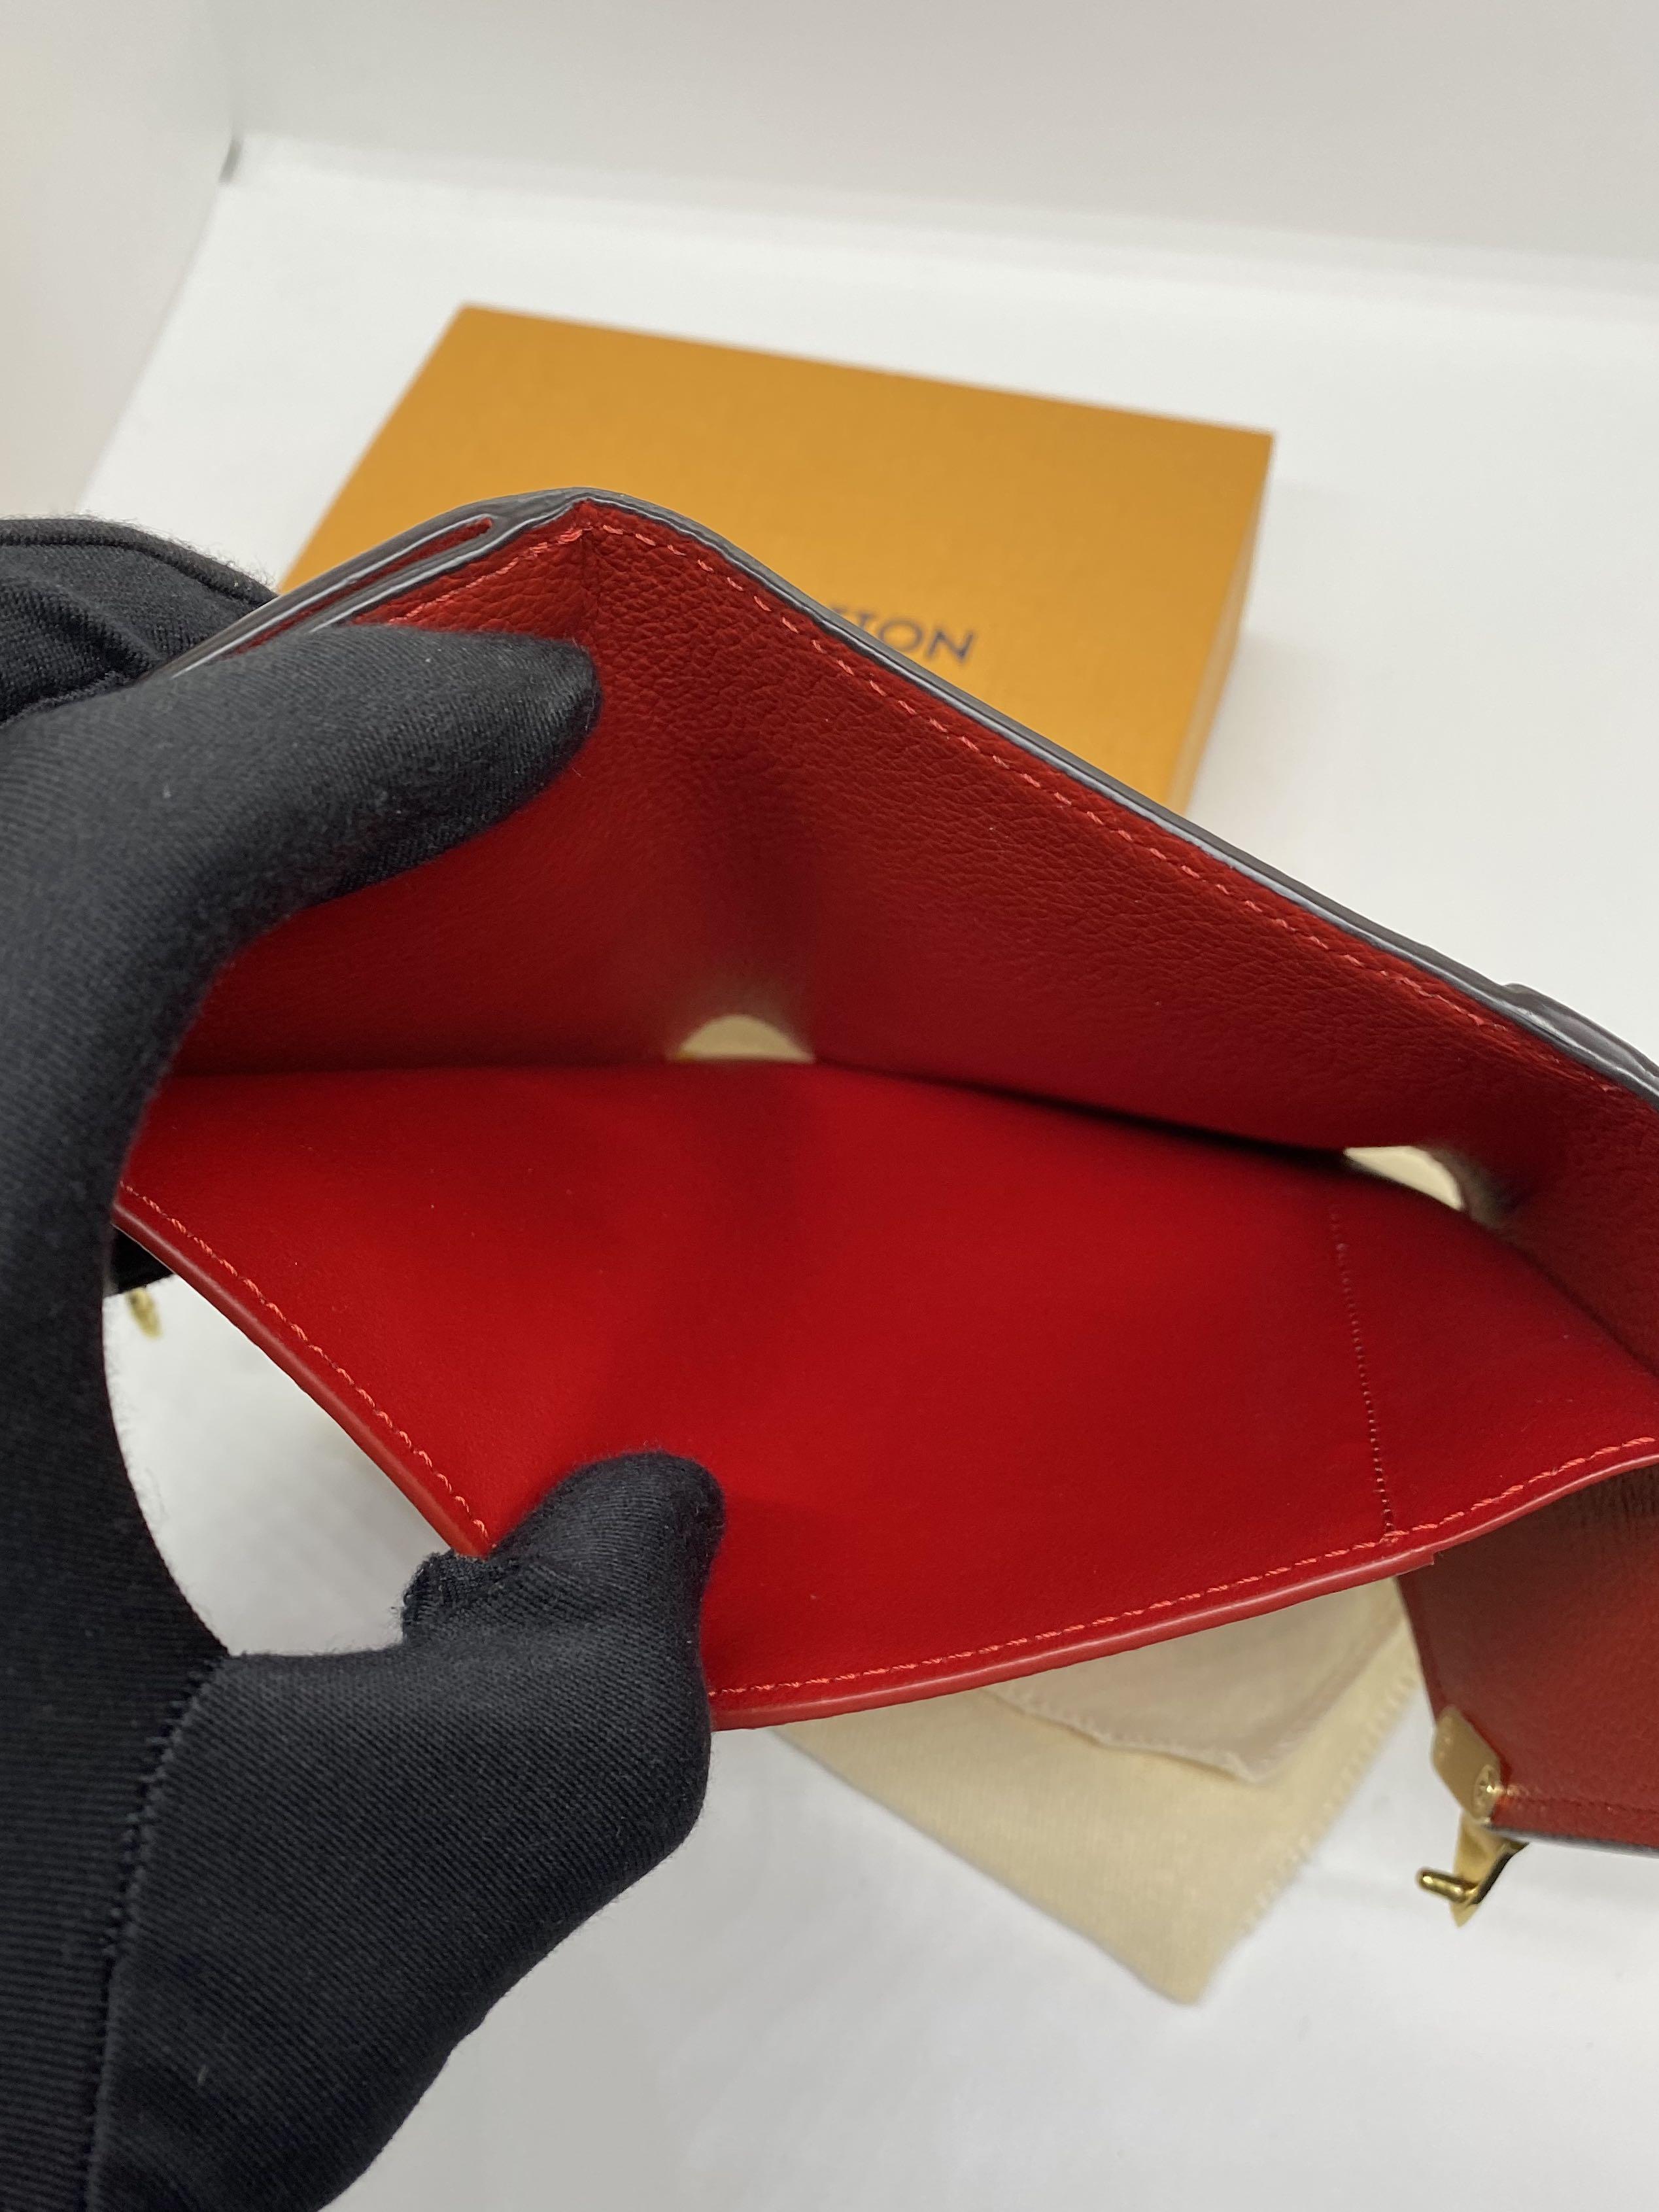 Shop Louis Vuitton TAIGA 2019 SS Pince wallet (M62978) by lufine